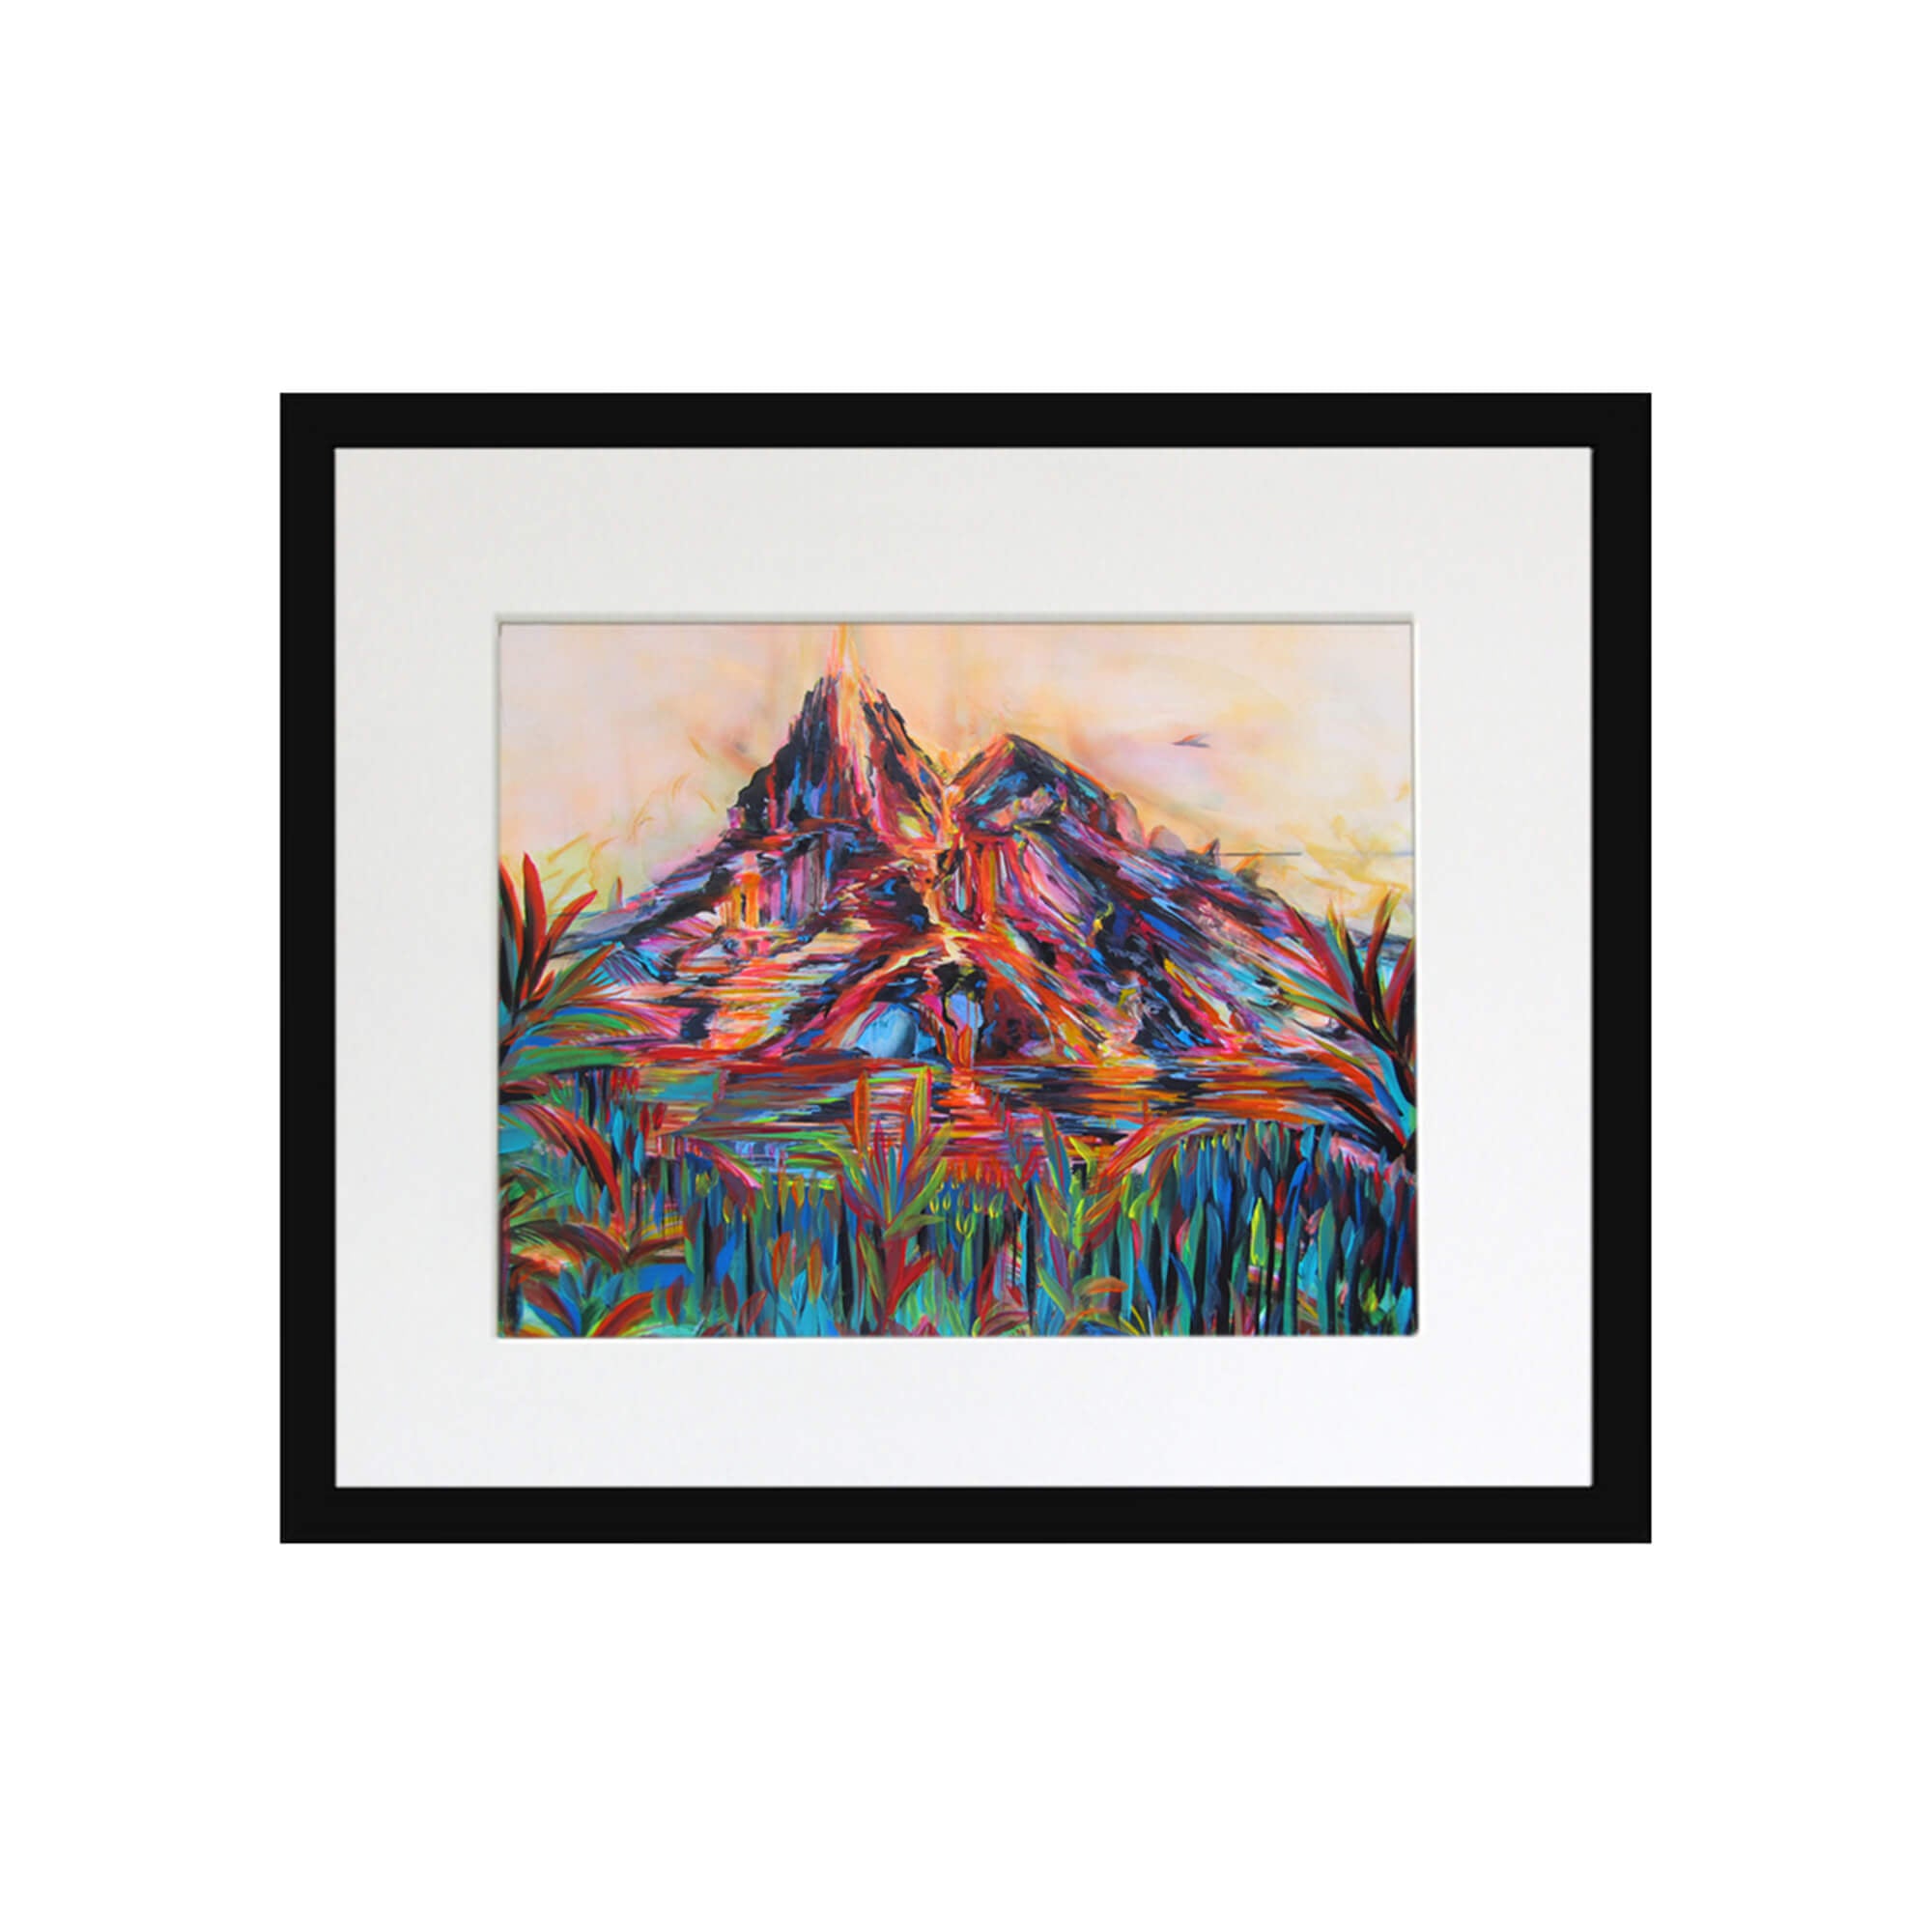 A multi-colored mountain by Hawaii artist Jess Burda